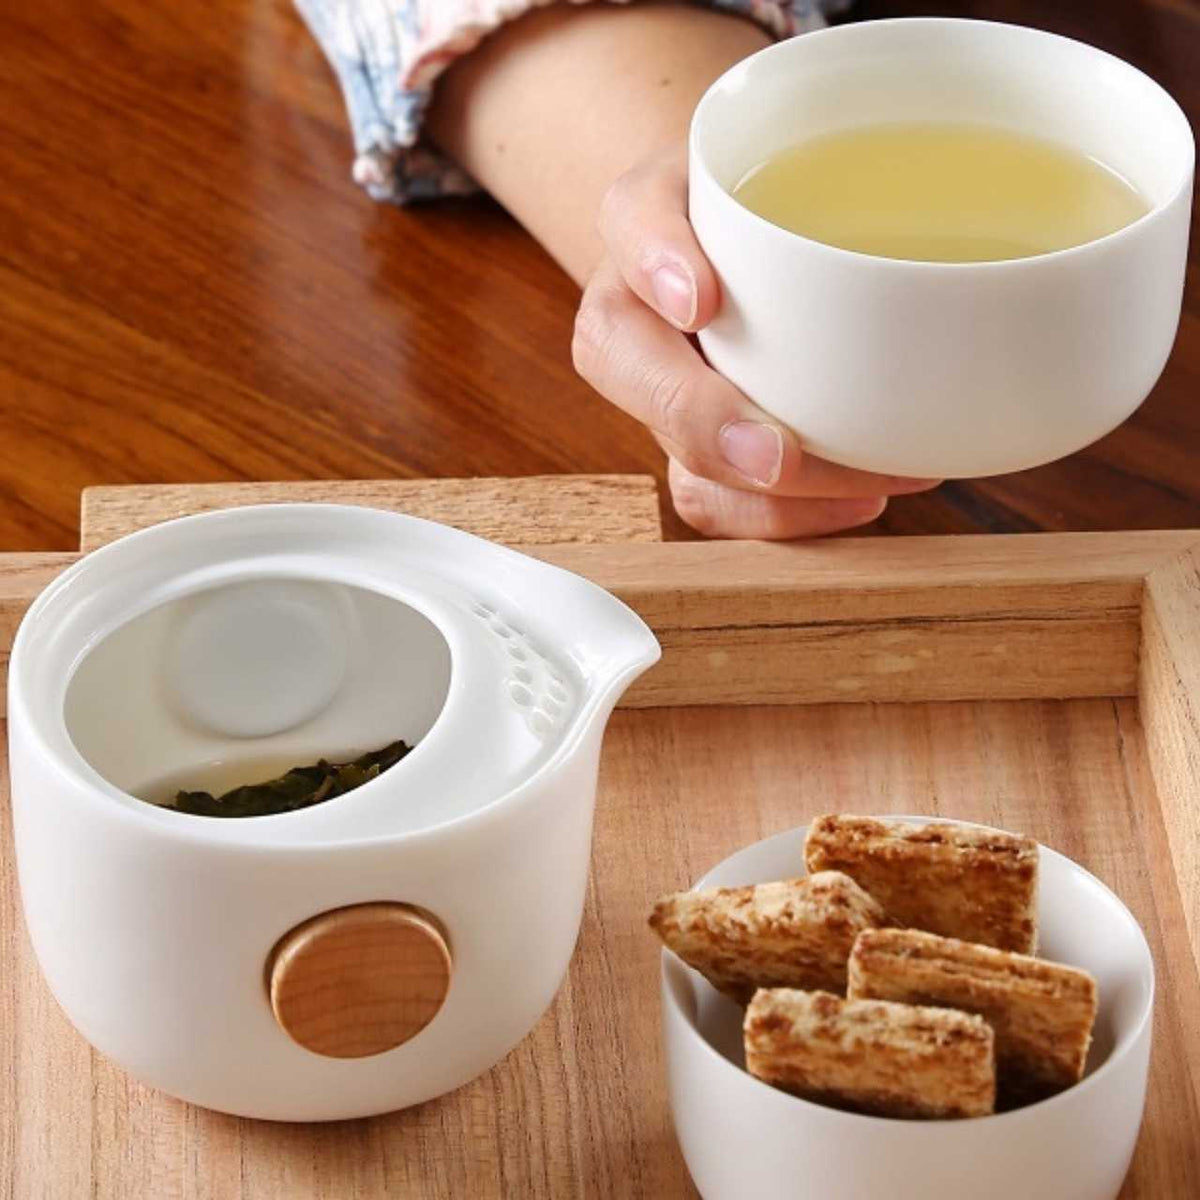 Large Travel Gaiwan Ceramic Tea Set